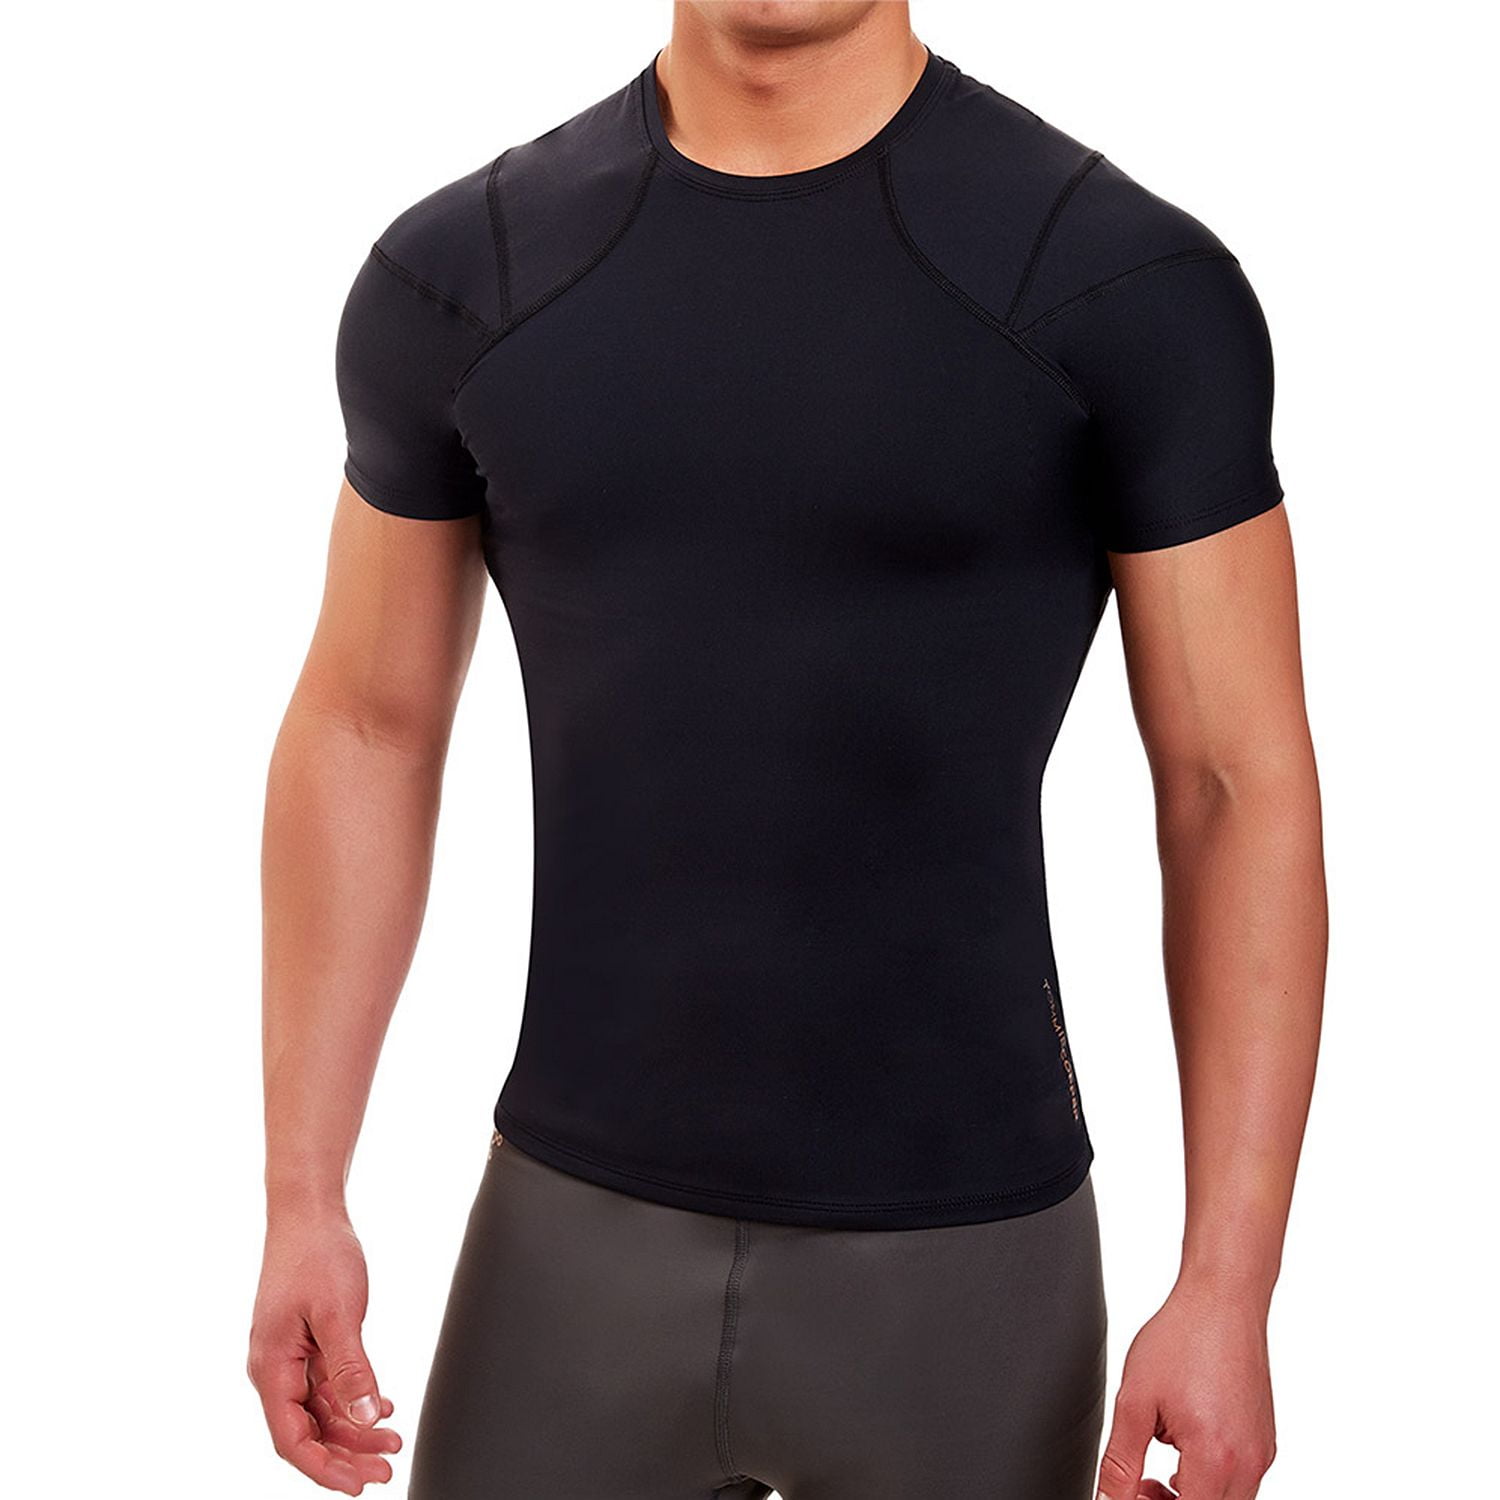 Tommie Copper Shoulder Centric Core Support Shirt Fit